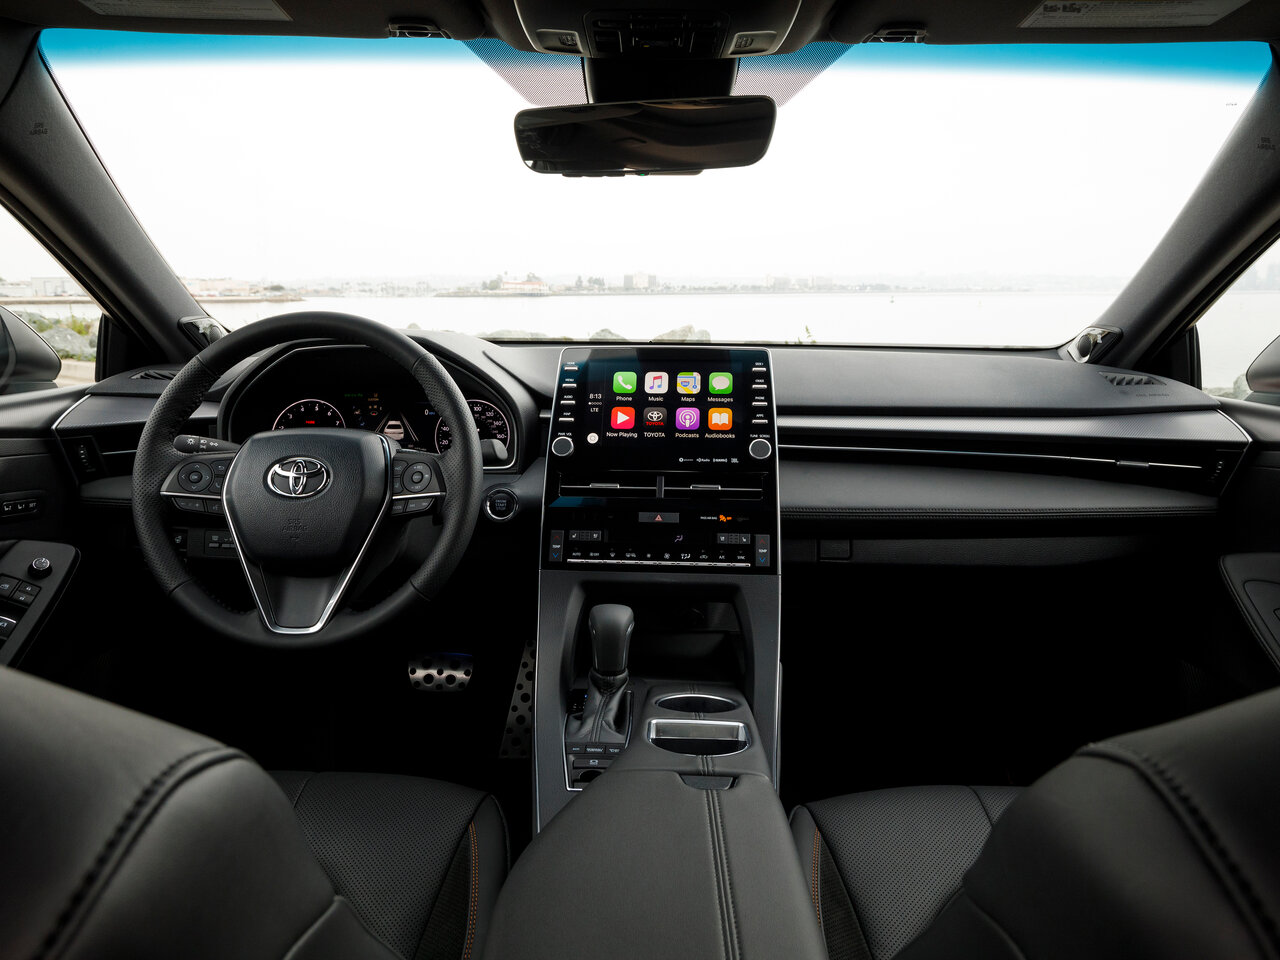 Toyota Avalon 2019 interior